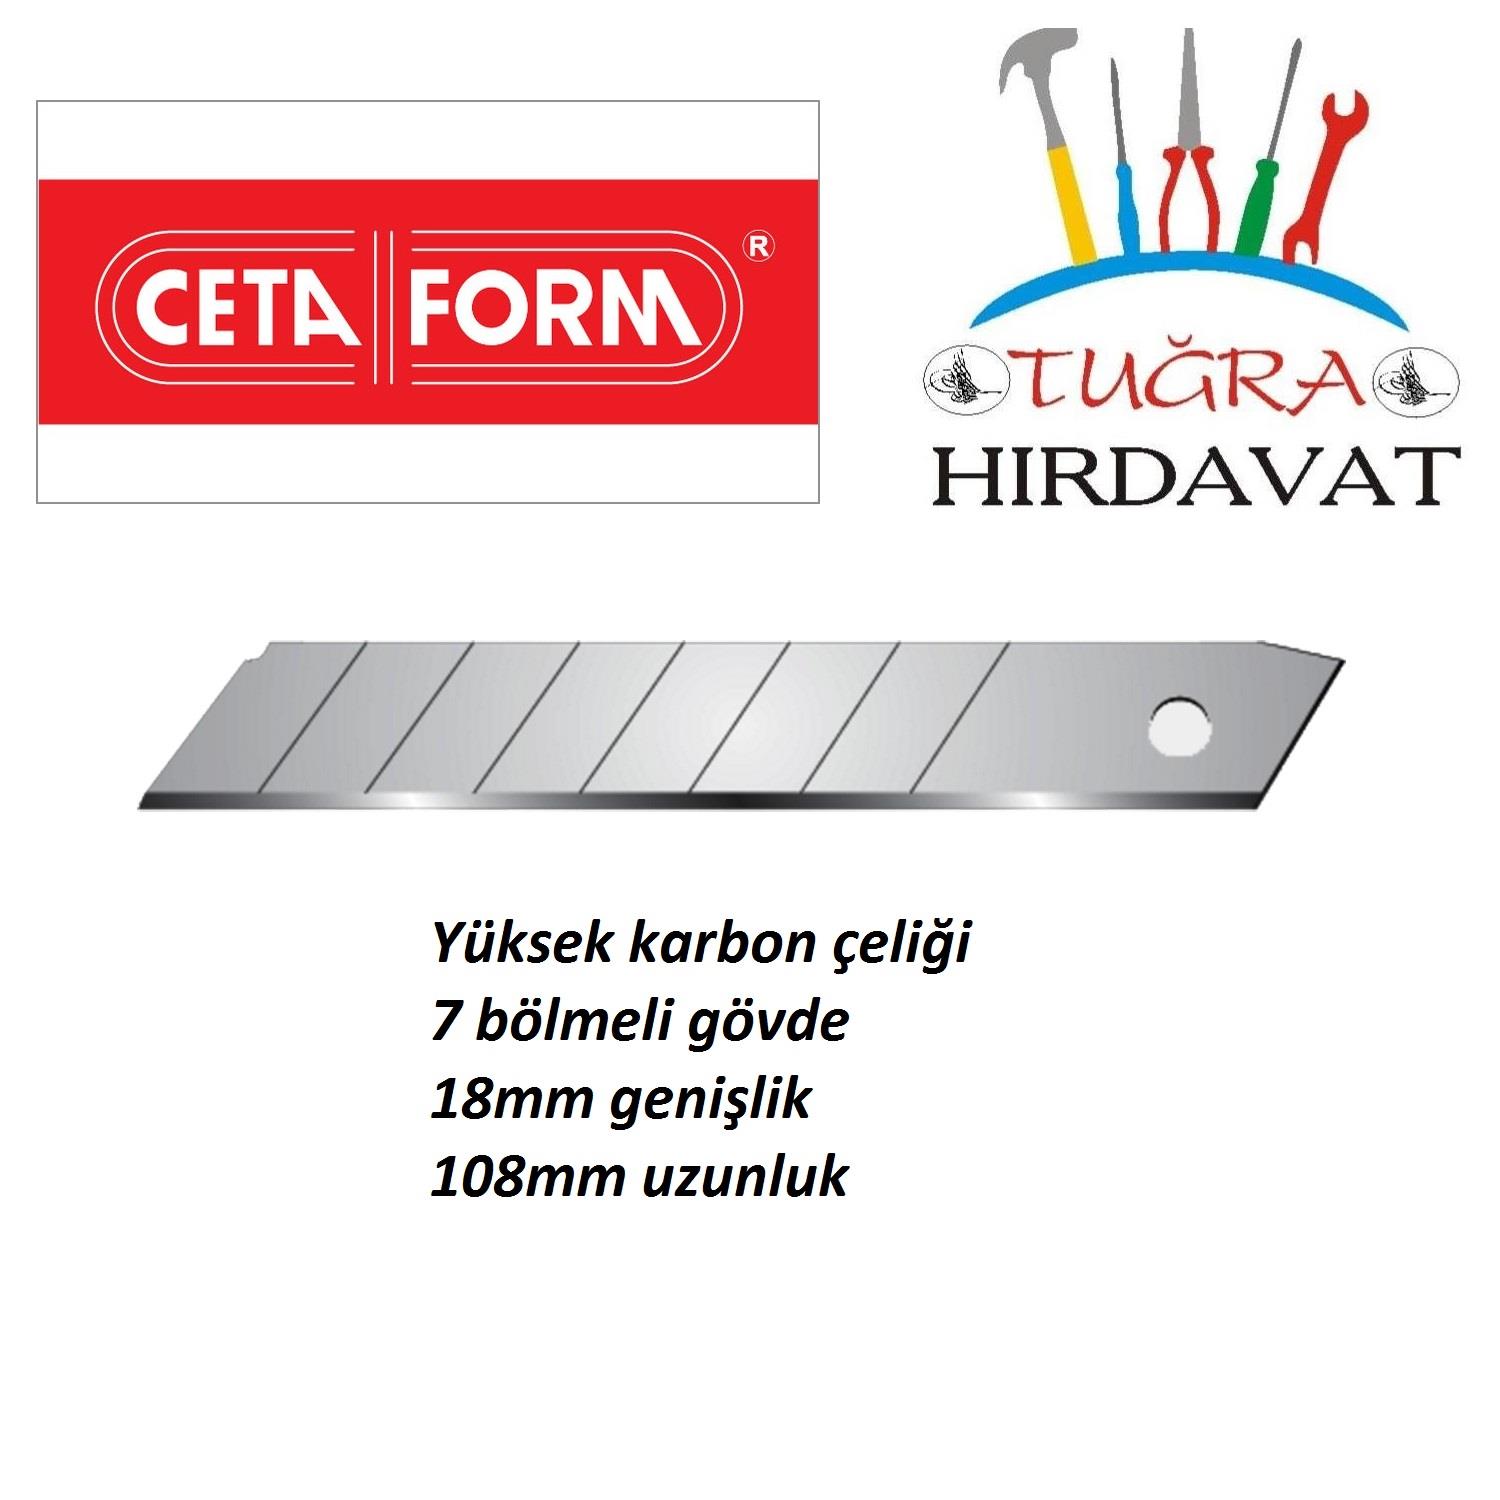 Ceta Form J45-R 18 Mm Maket Bıçağı Yedeği - 10 Lu Paket